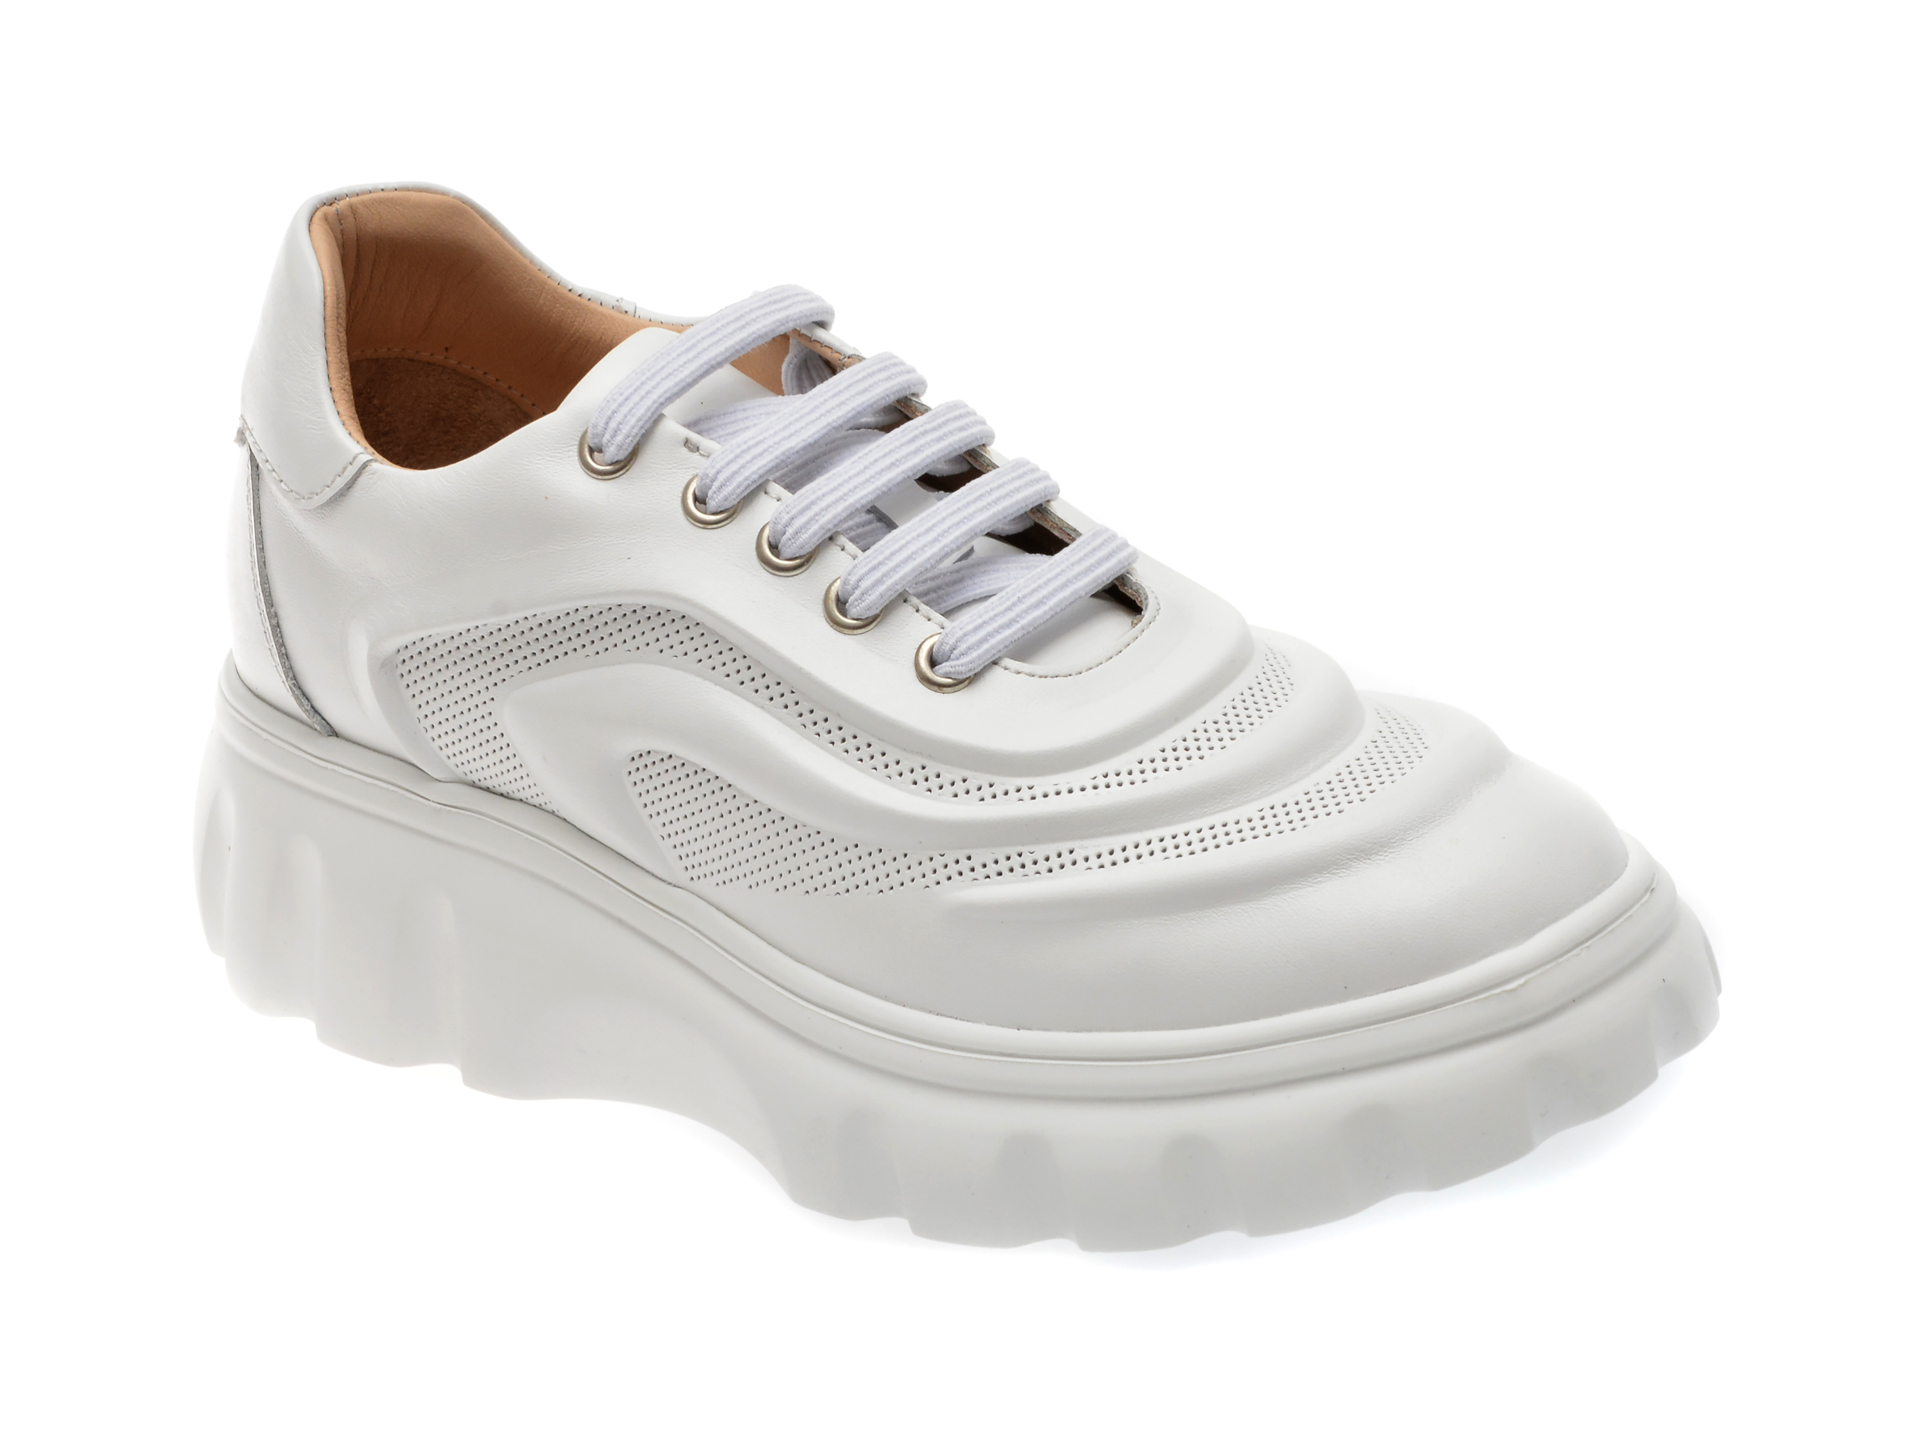 Pantofi casual EPICA albi, 49753, din piele naturala